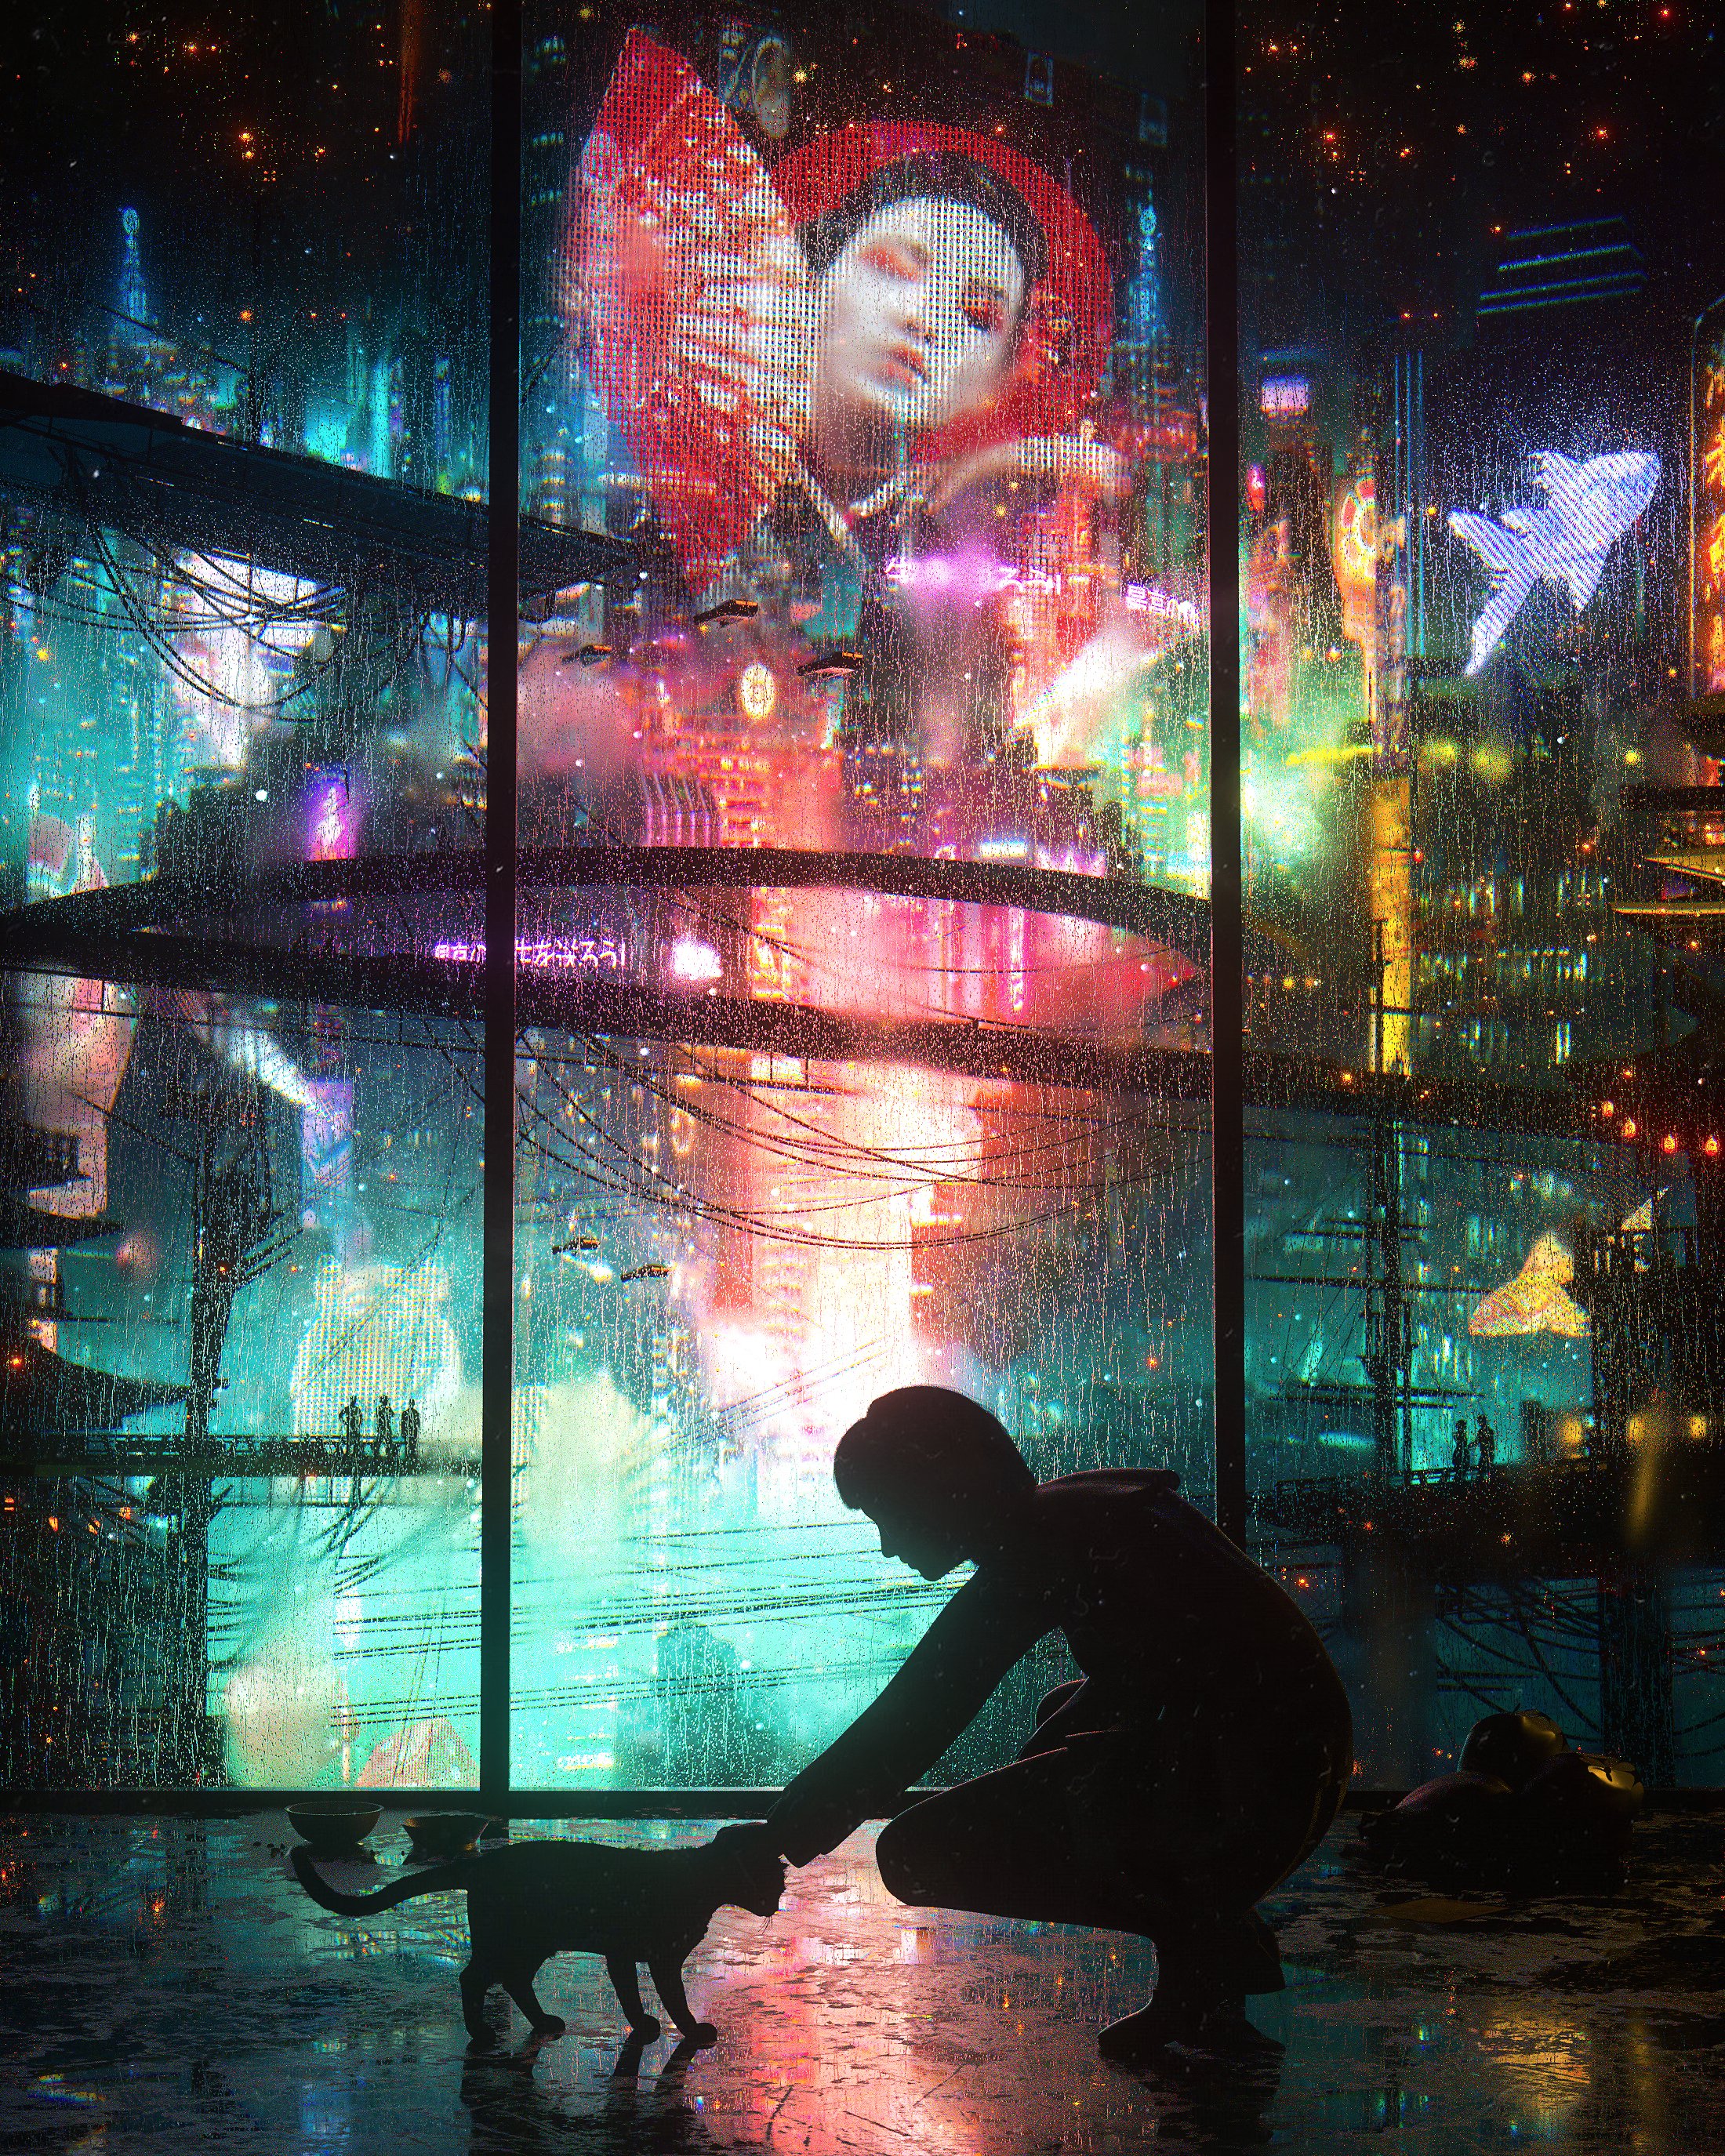 General 2200x2750 digital art cyberpunk city lights science fiction neon short hair looking out window city portrait display cats animals night